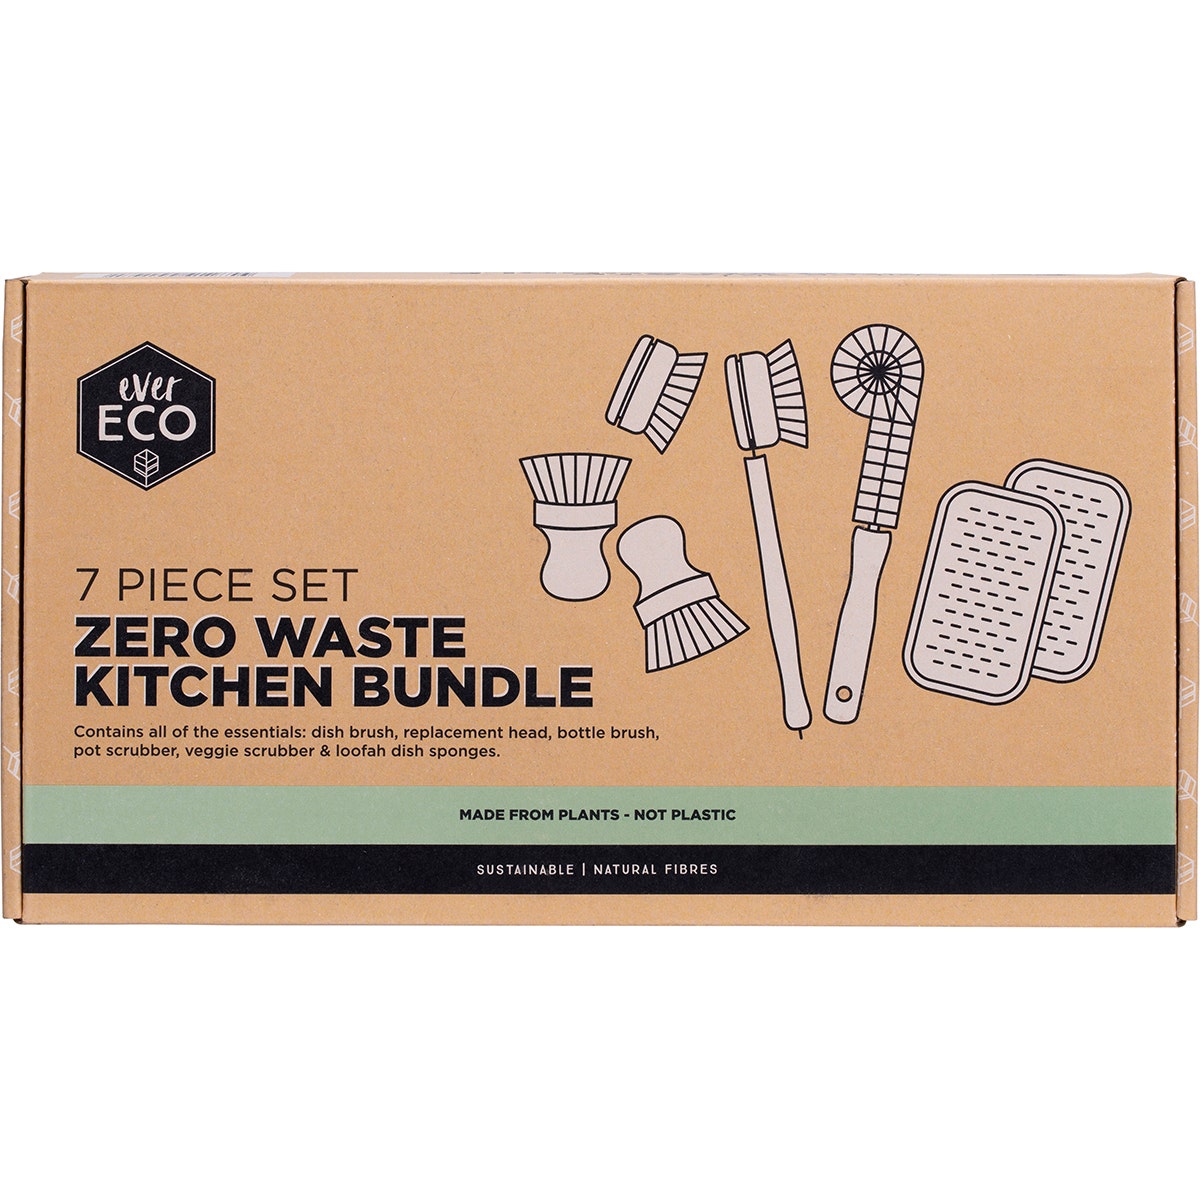 Ever Eco Zero Waste Kitchen Bundle 7 Piece Set